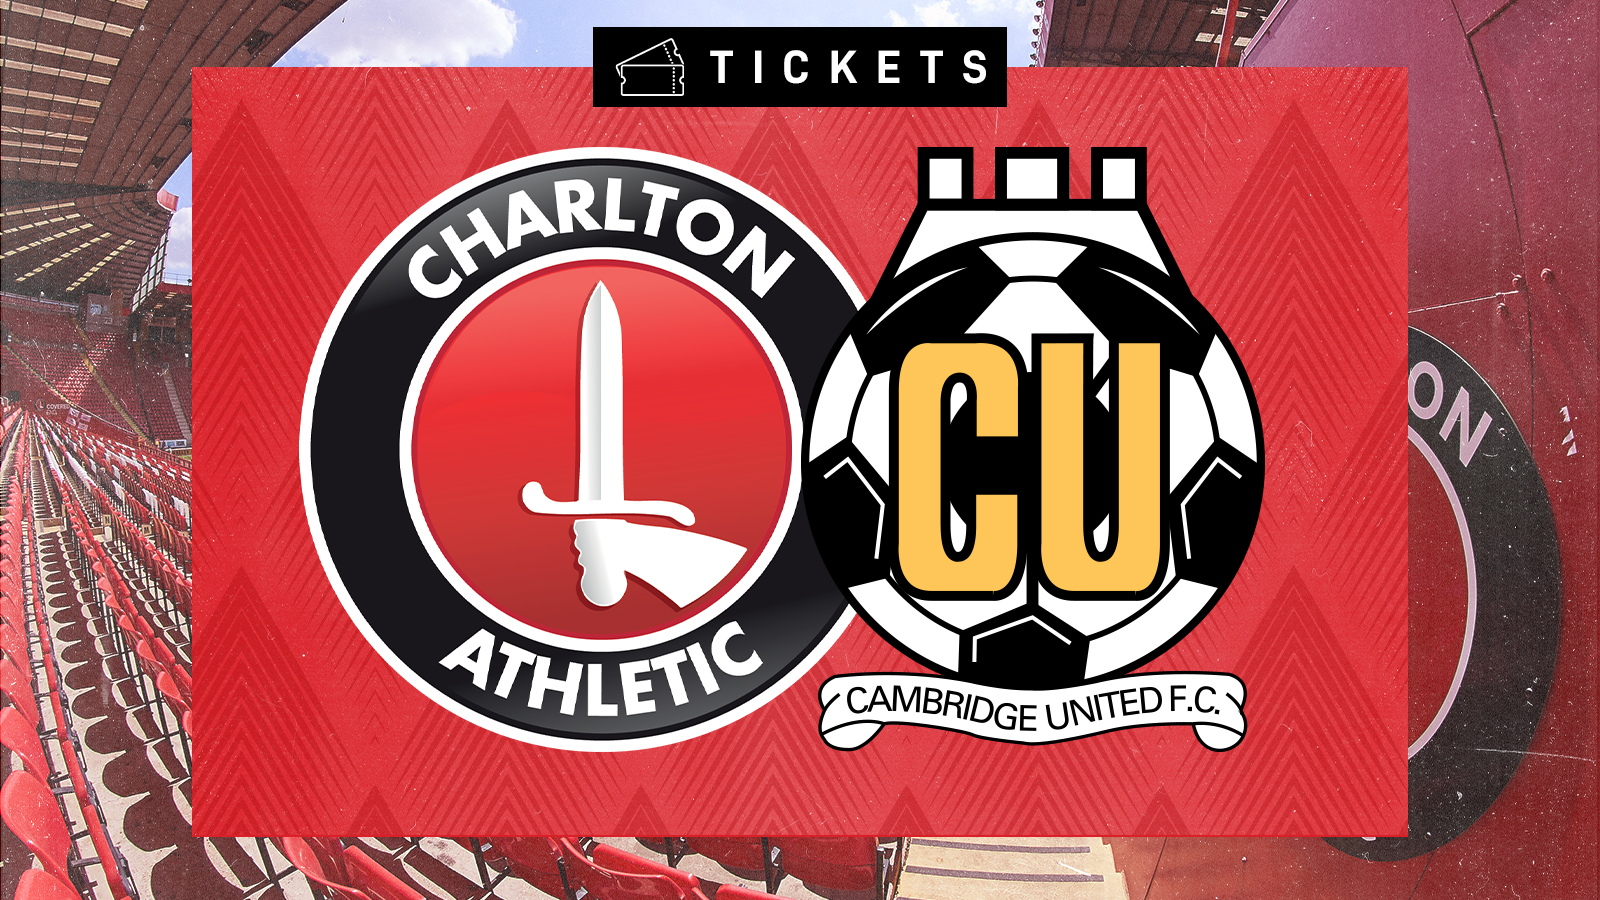 Charlton and Cambridge logos